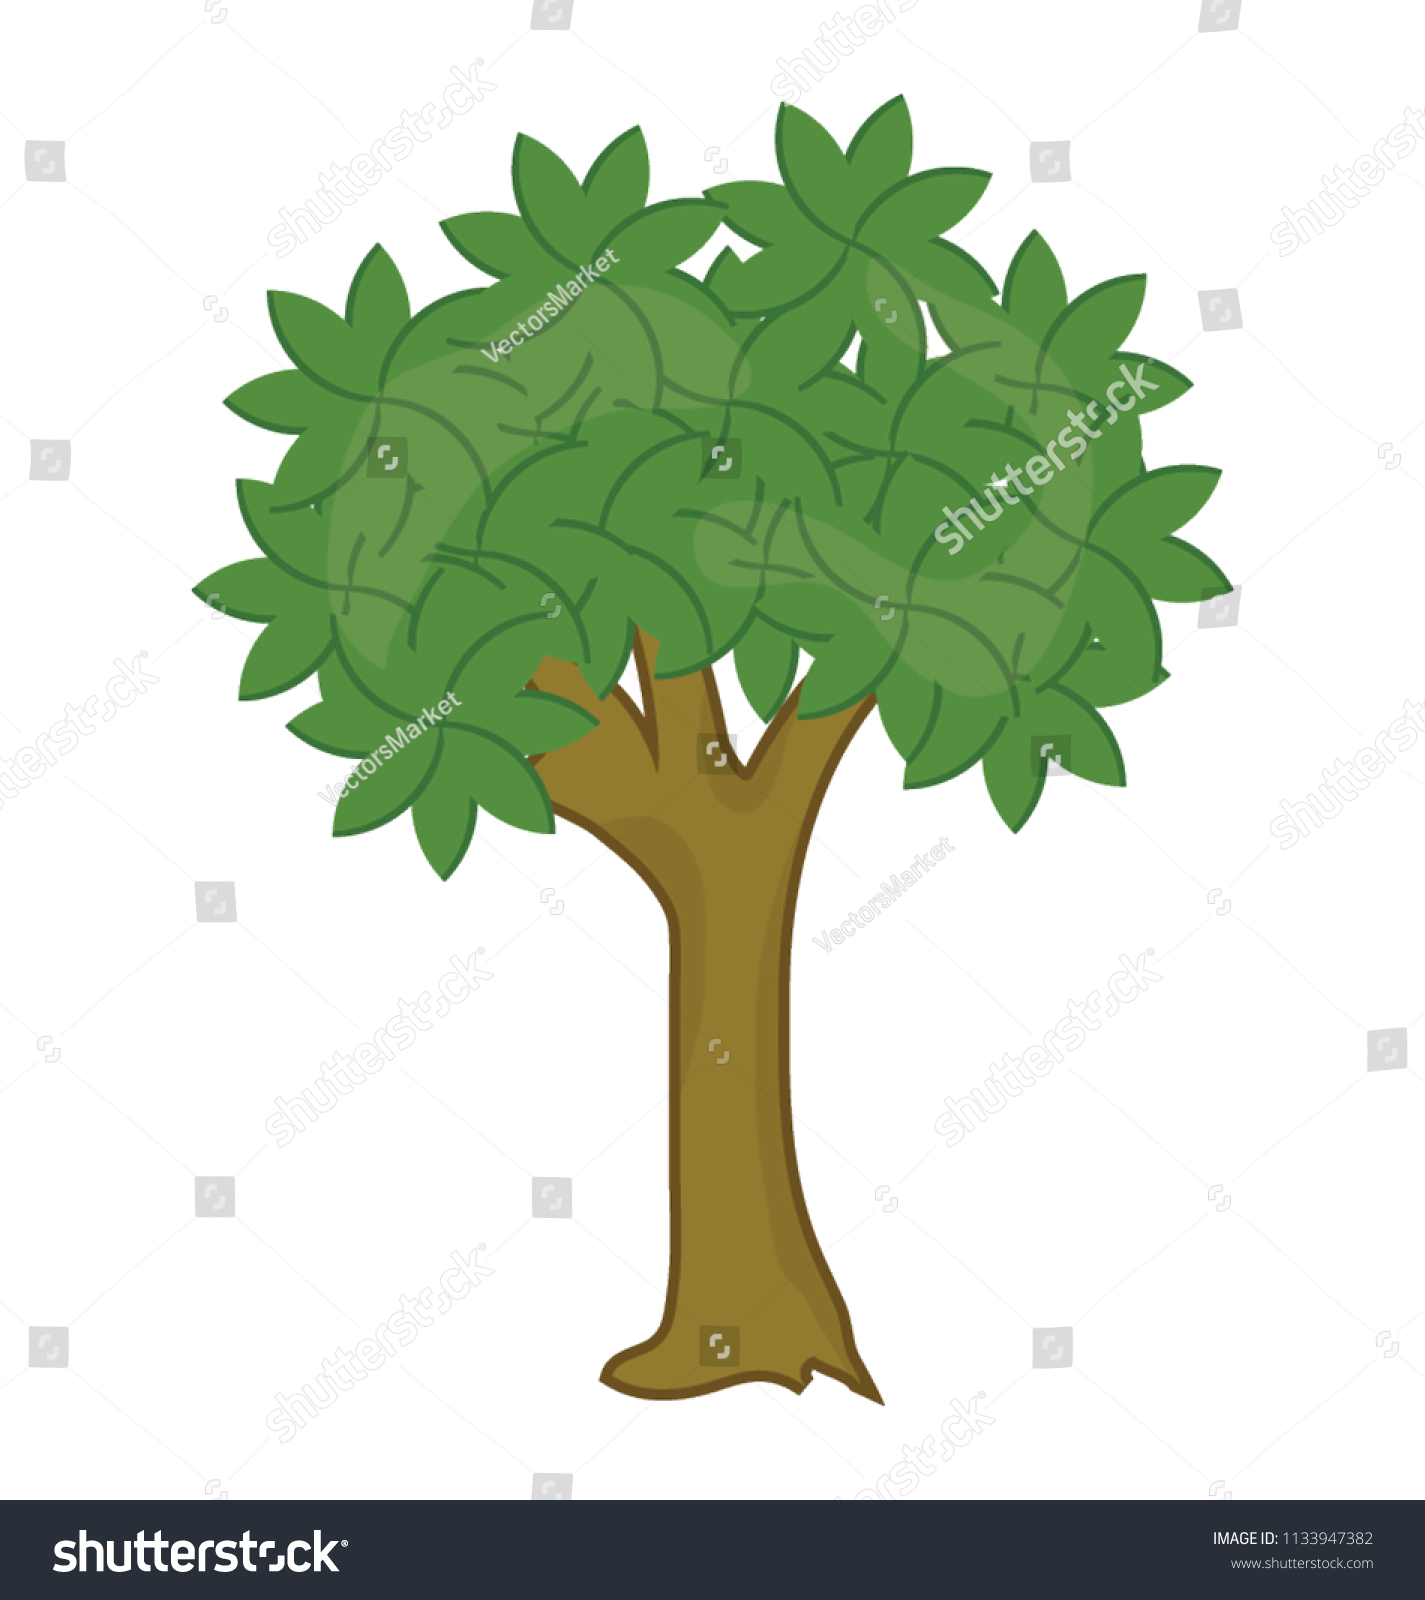 Evergreen Bitternut Hickory Tree Flat Design Stock Vector Royalty Free